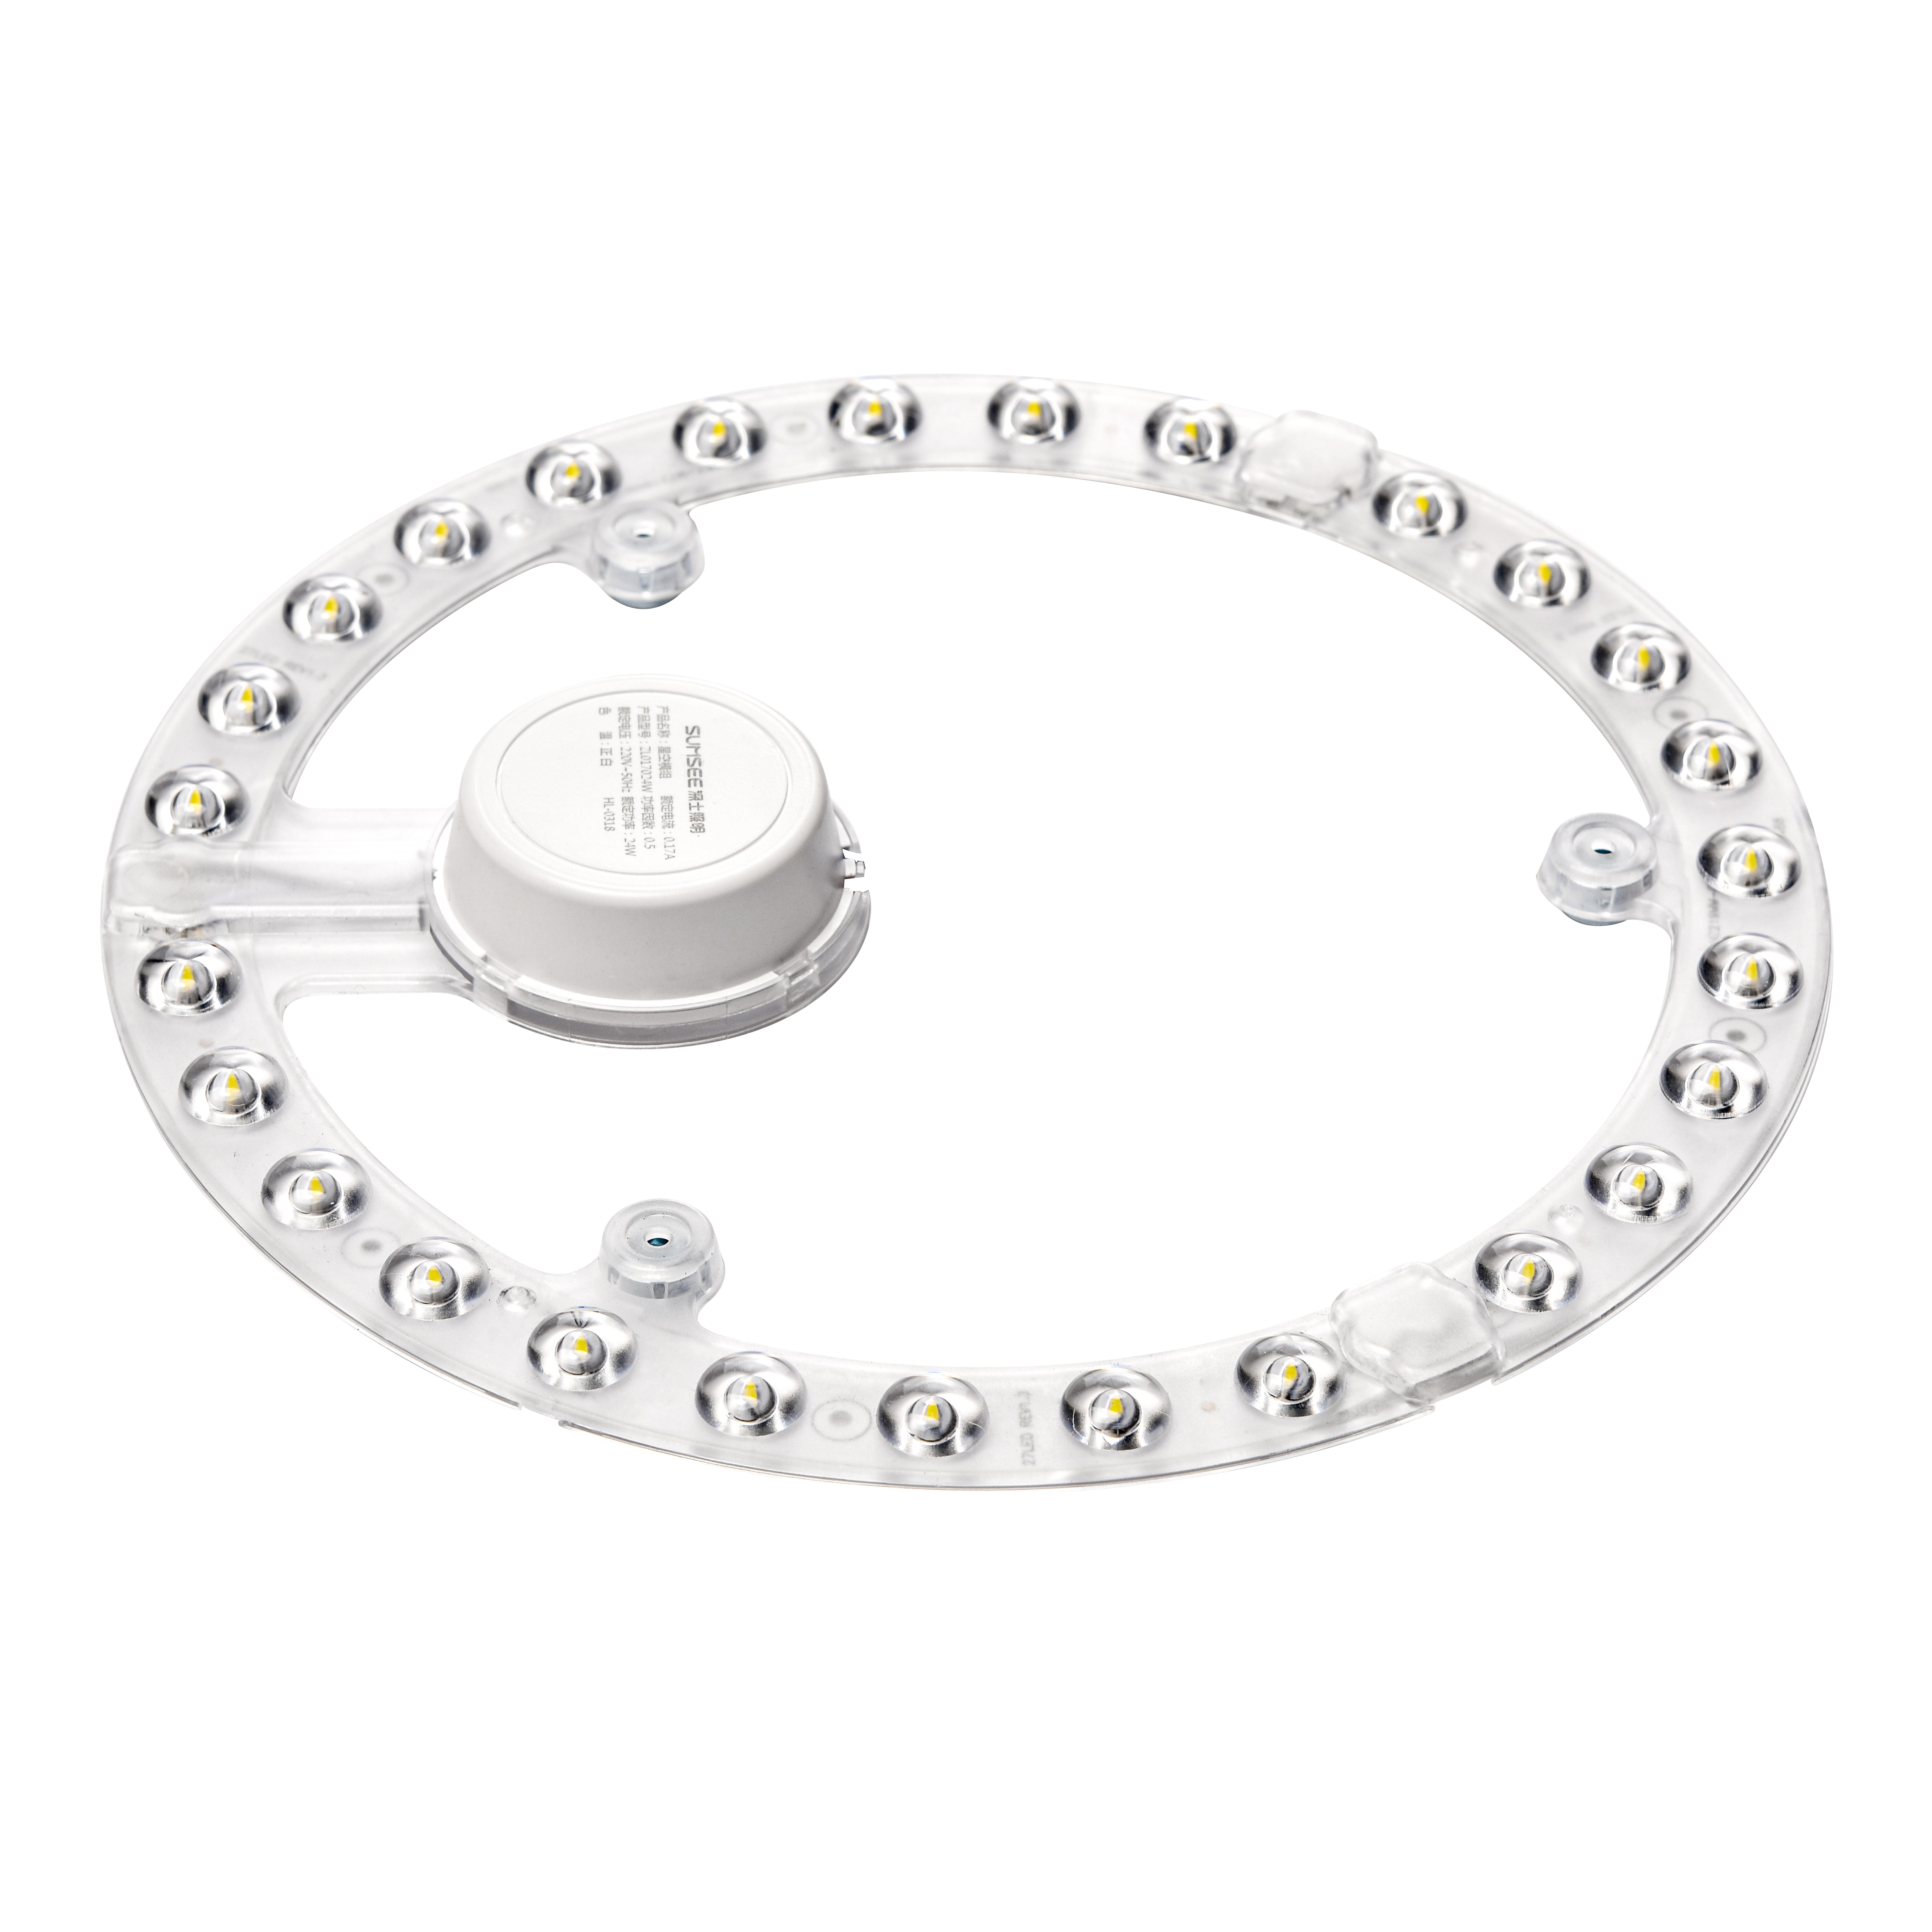 Home energy-saving round LED ceiling light star module